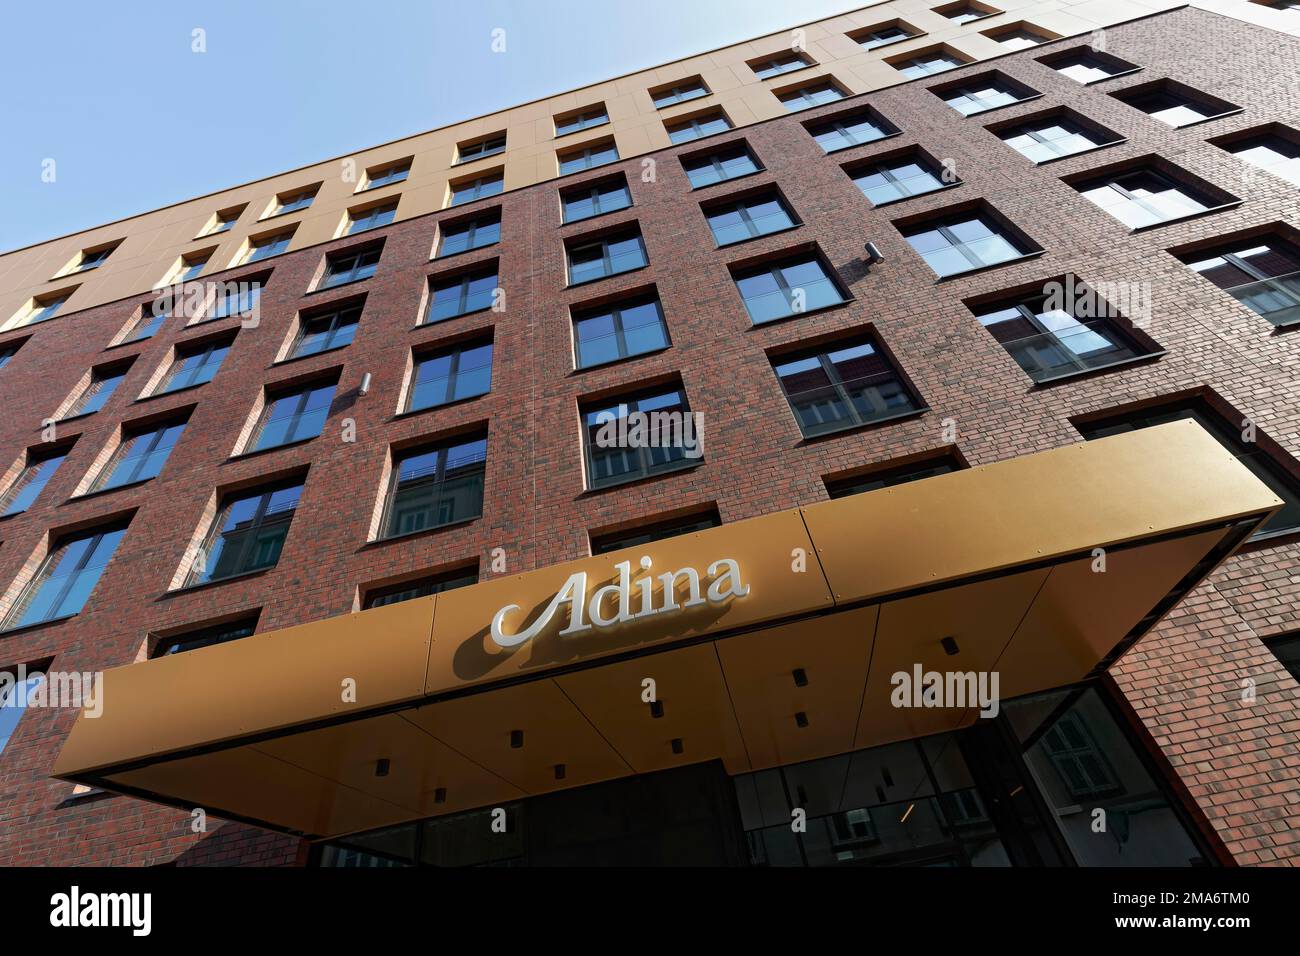 Adina Apartment Hotel Duesseldorf, facade with logo, lifestyle hotel, North Rhine-Westphalia, Germany Stock Photo